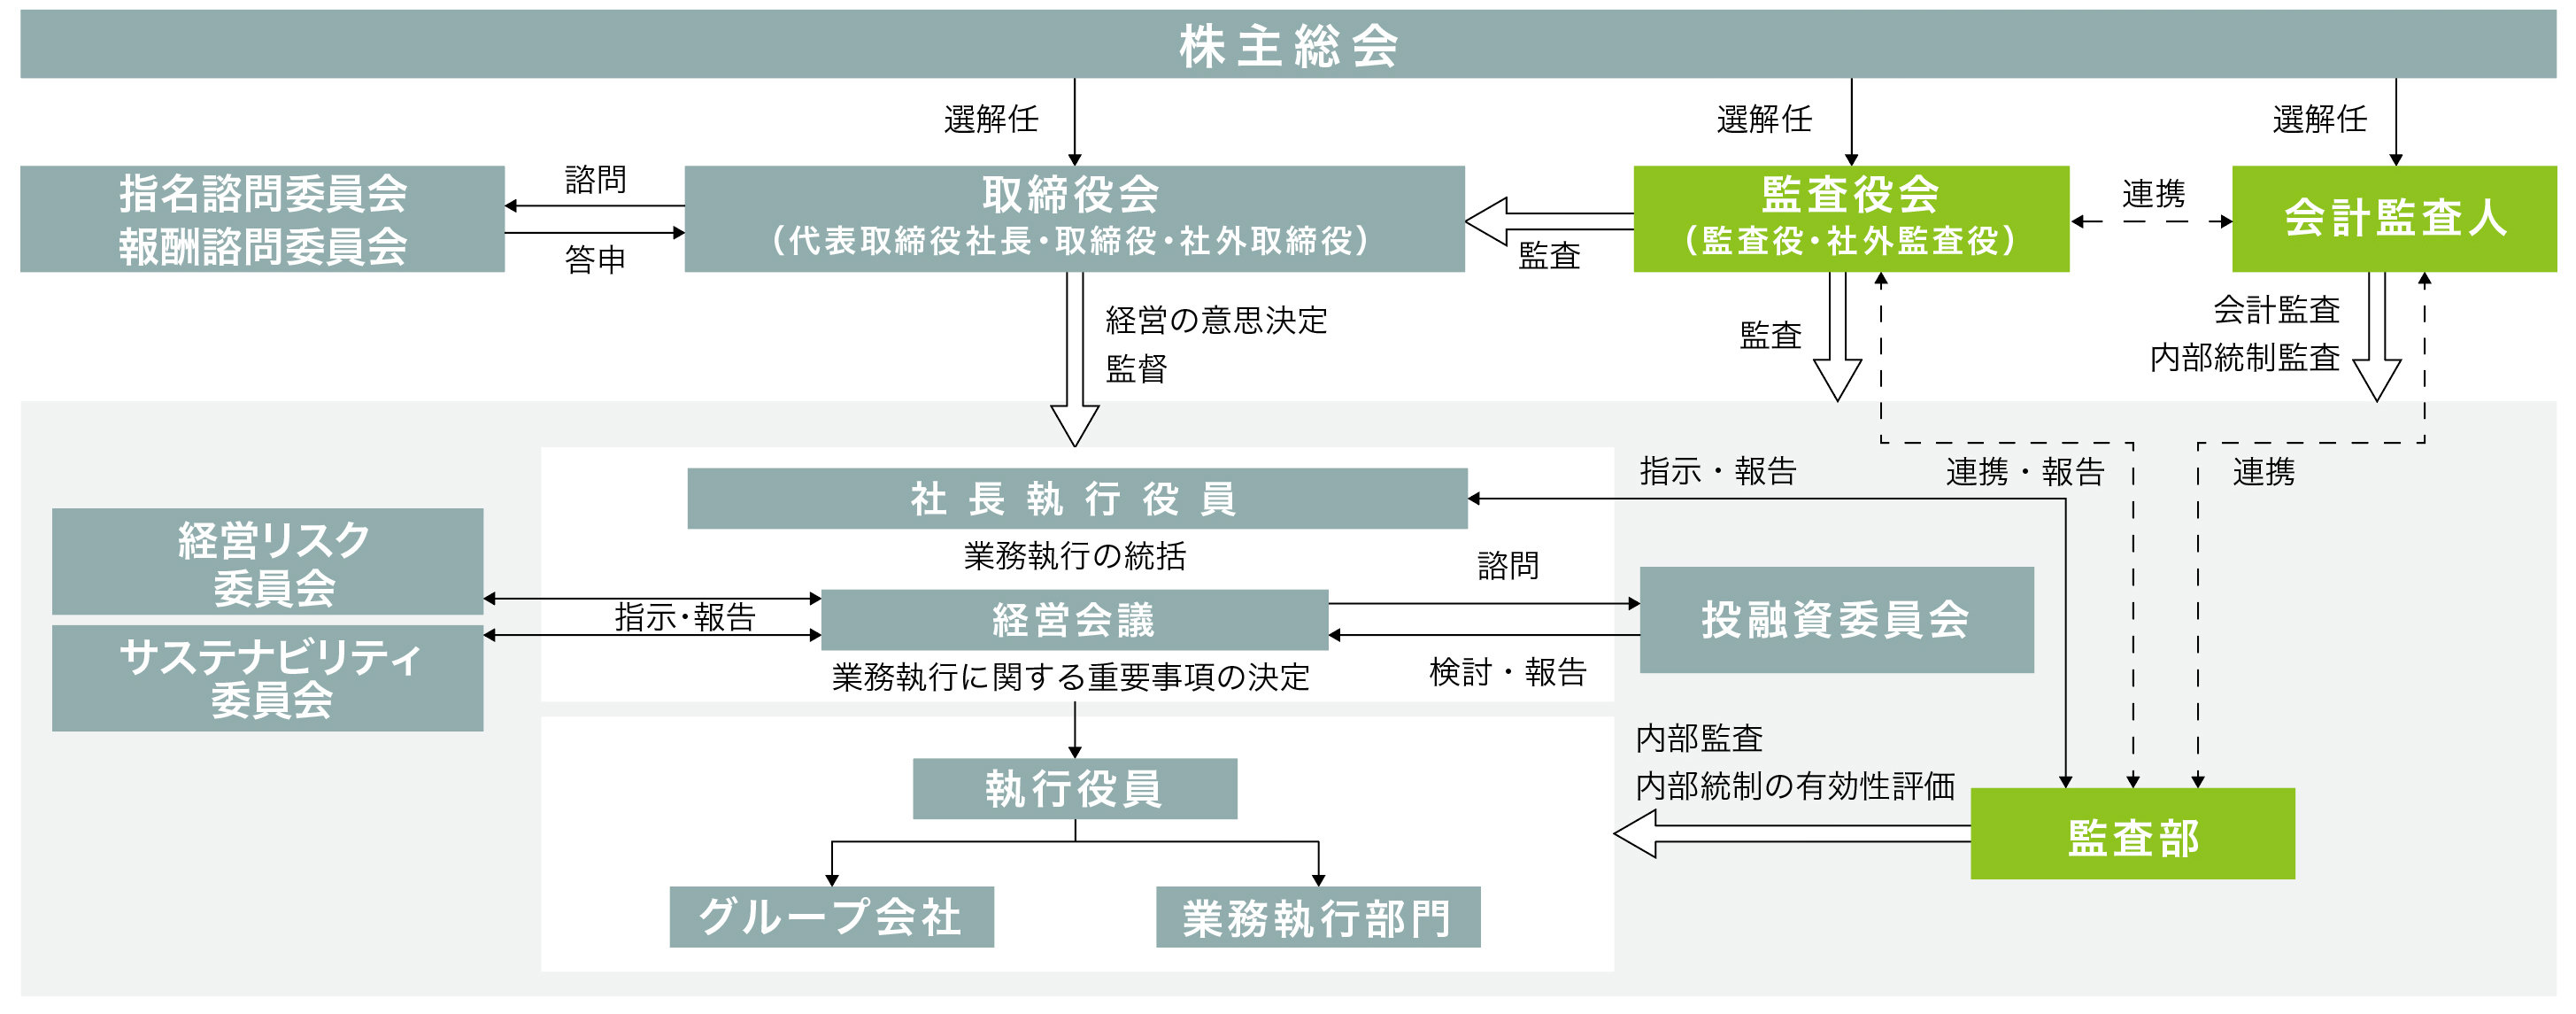 Governance system diagram